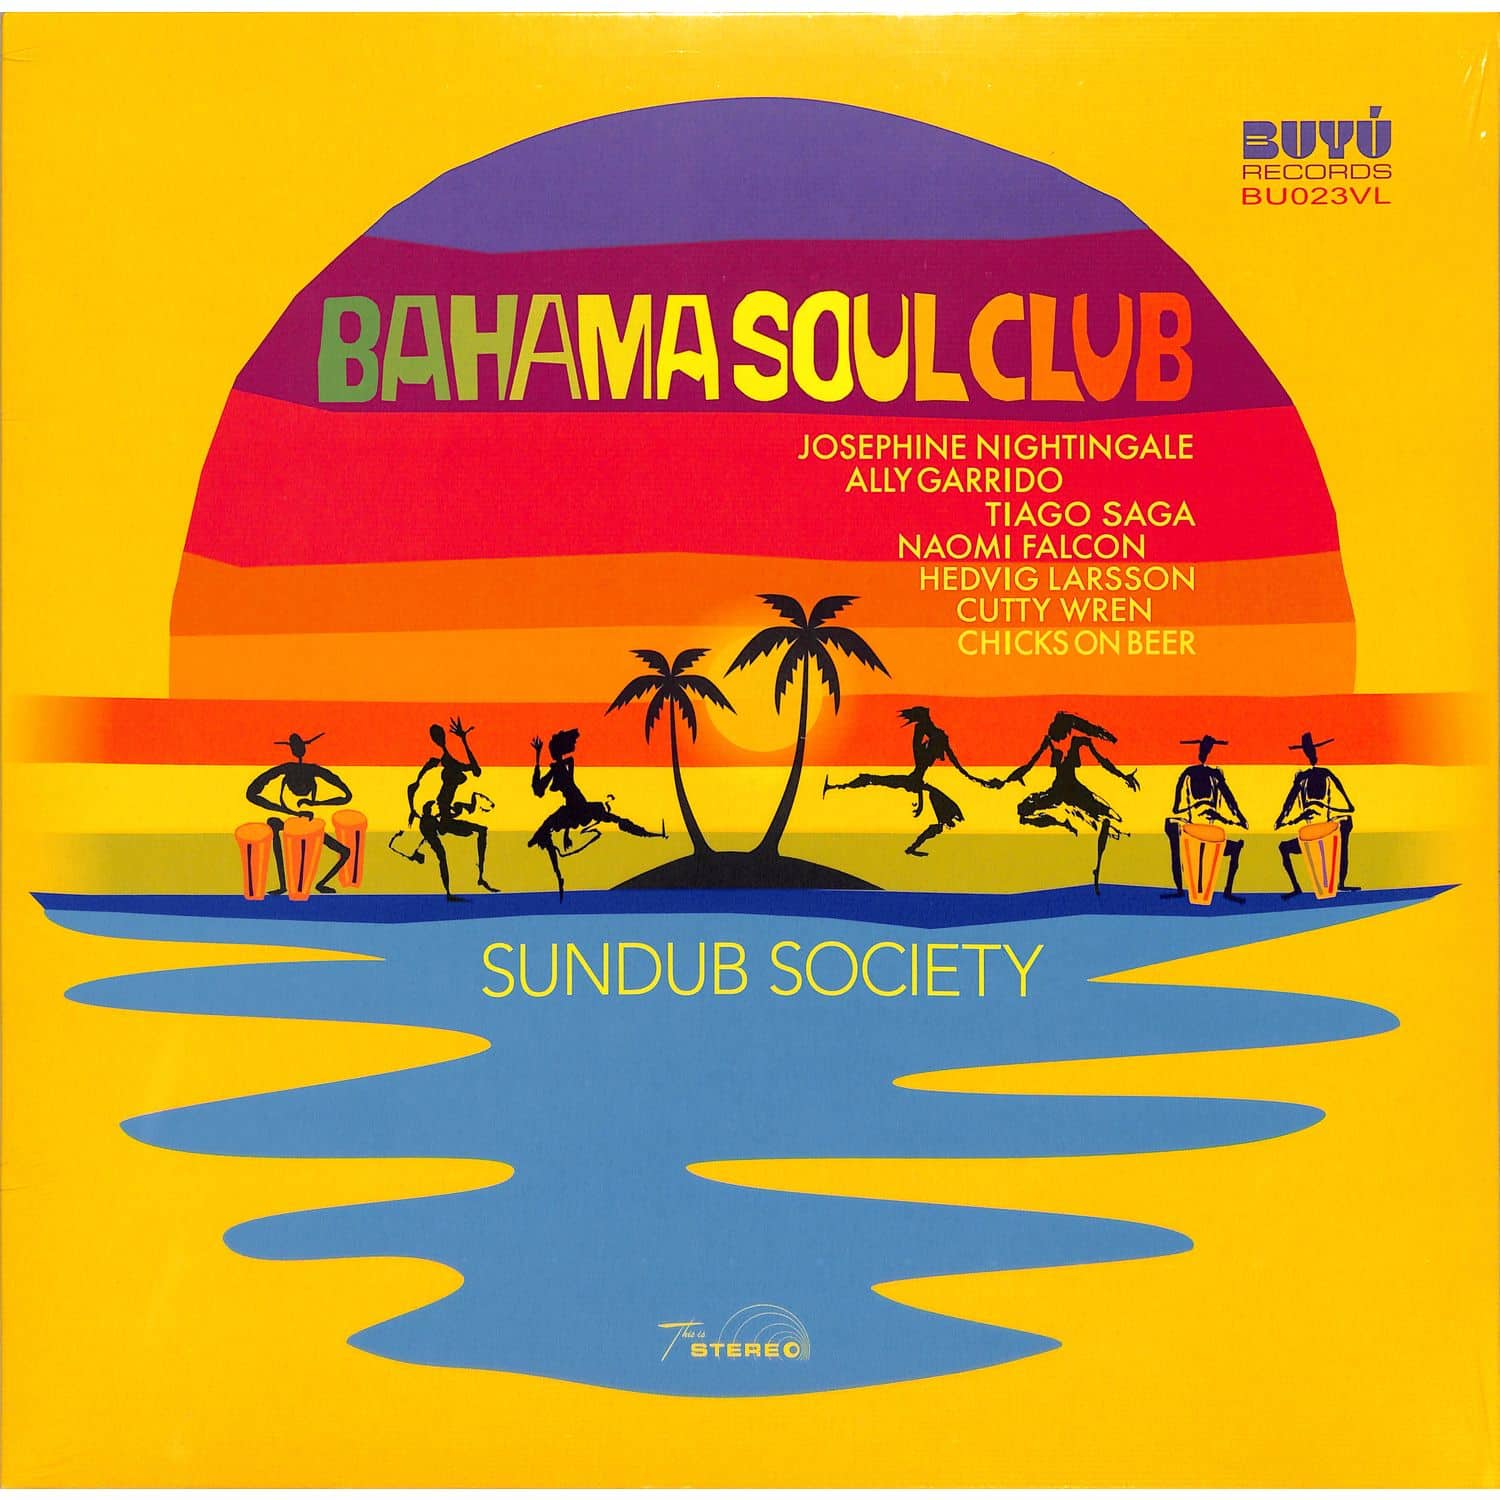 Bahama Soul Club - SUNDUB SOCIETY 